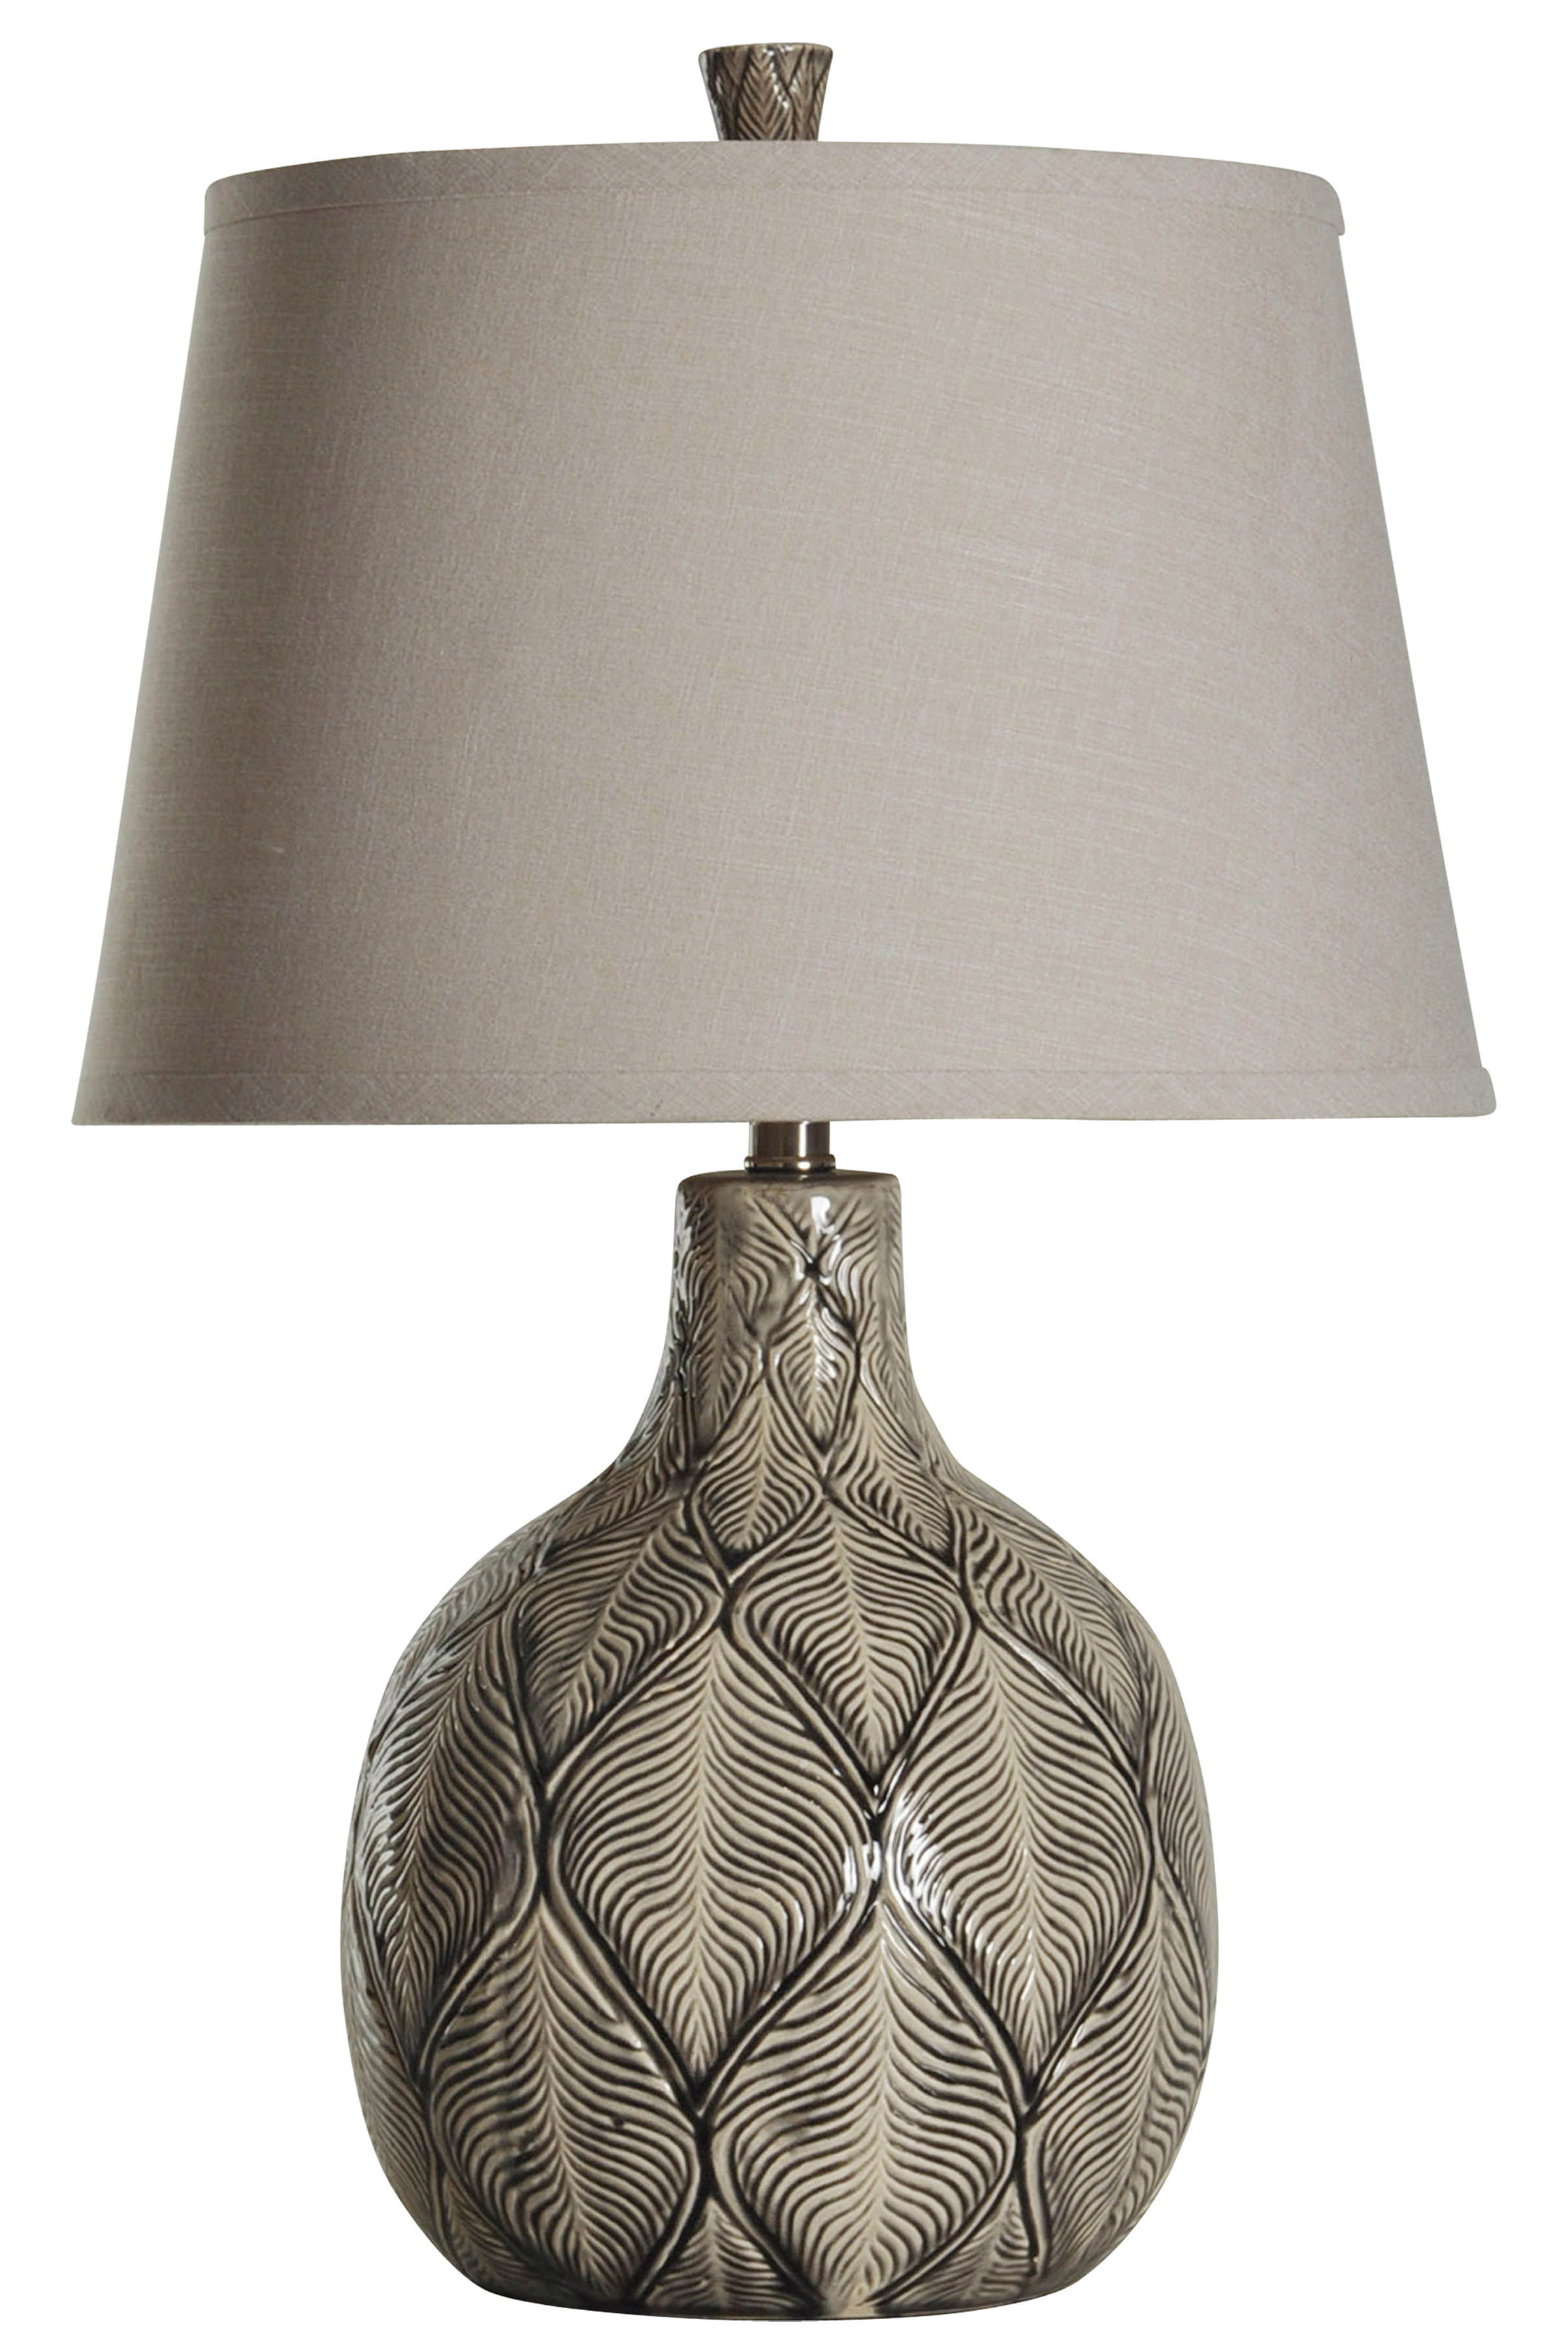 Stylish Jane Table Lamps Ceramic Ivory Shade Fabric Living Bedroom Bedside Light 